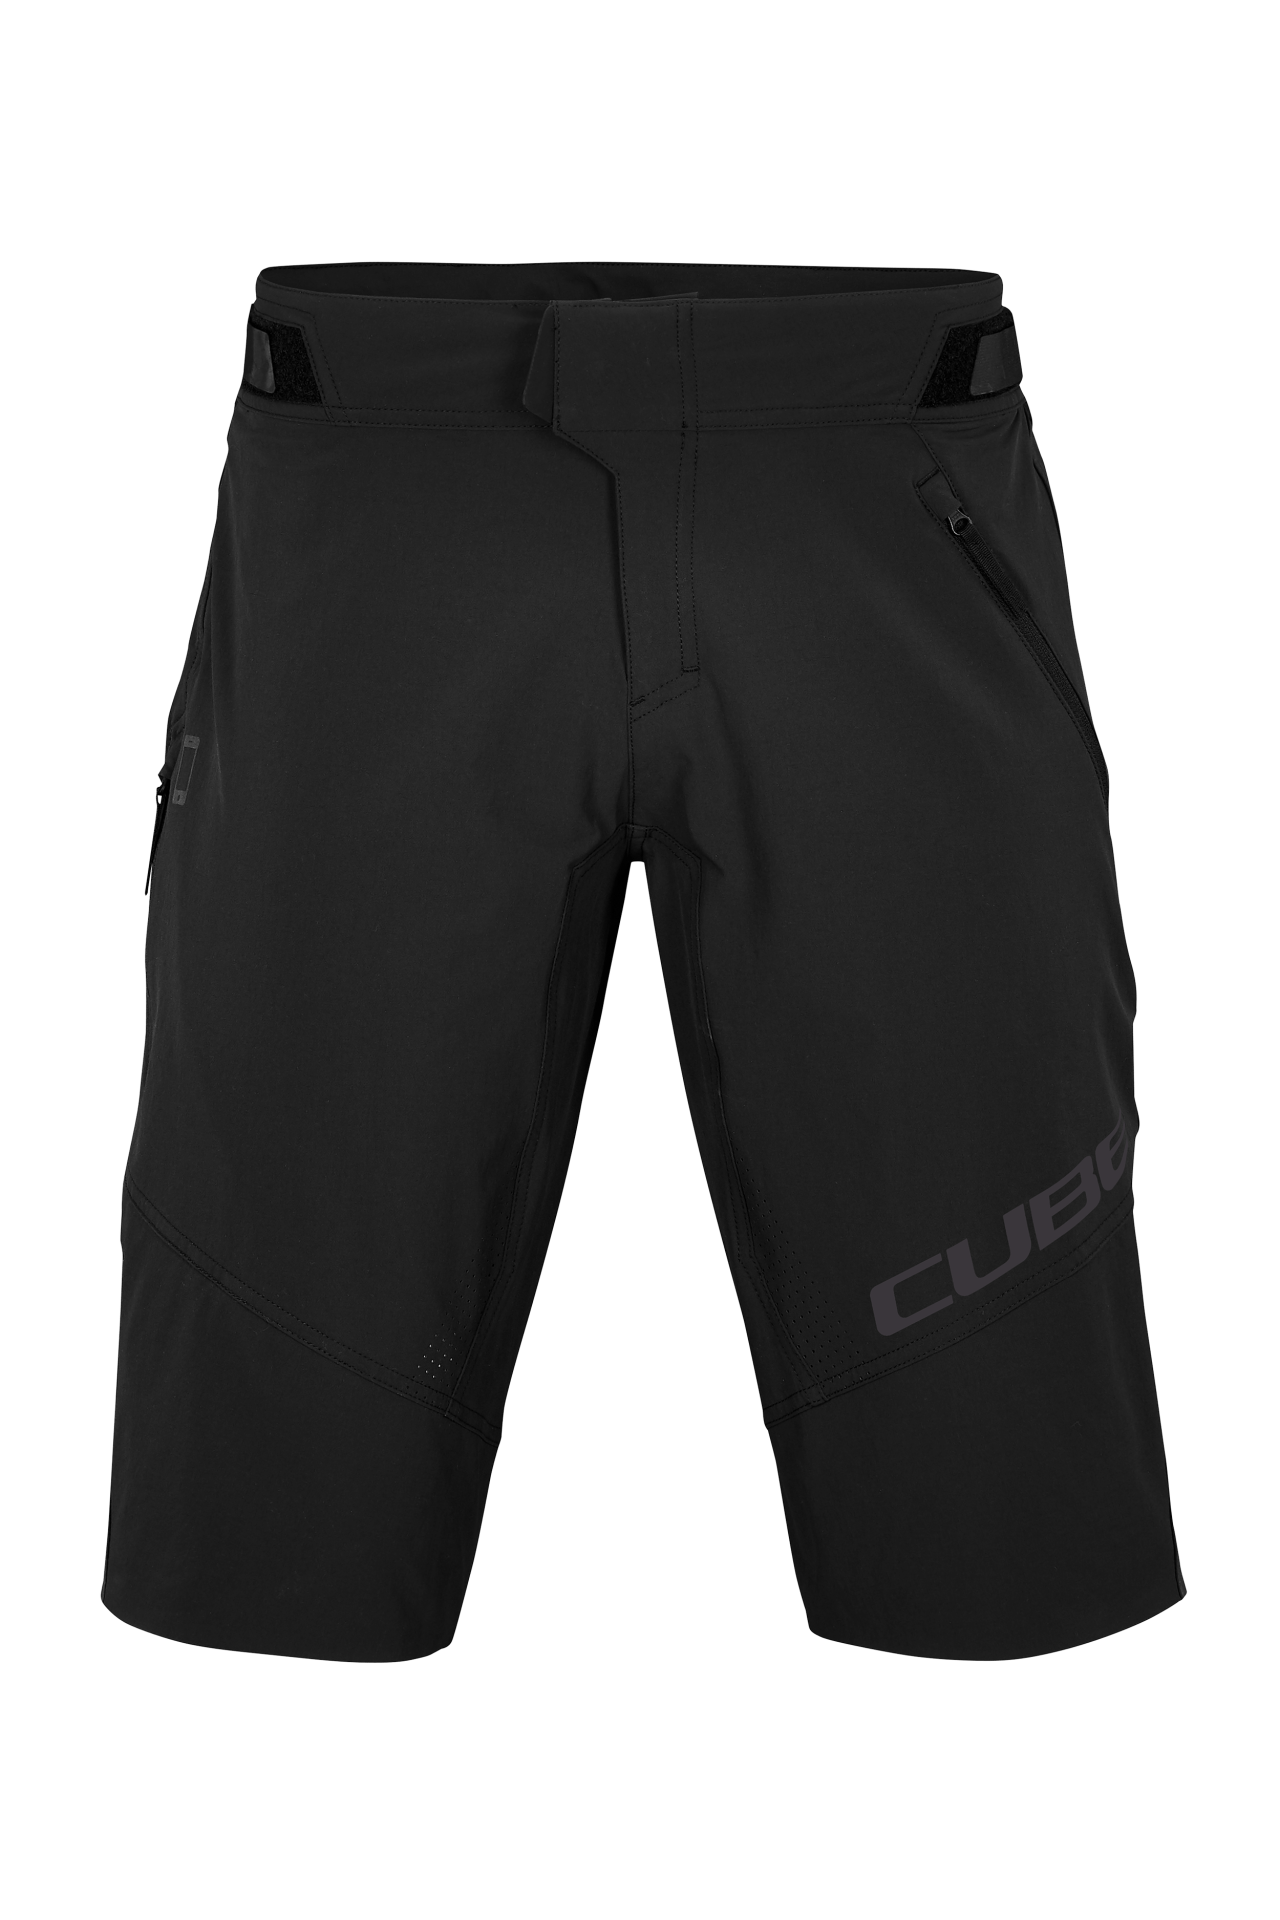 CUBE VERTEX Baggy Shorts X Actionteam black S